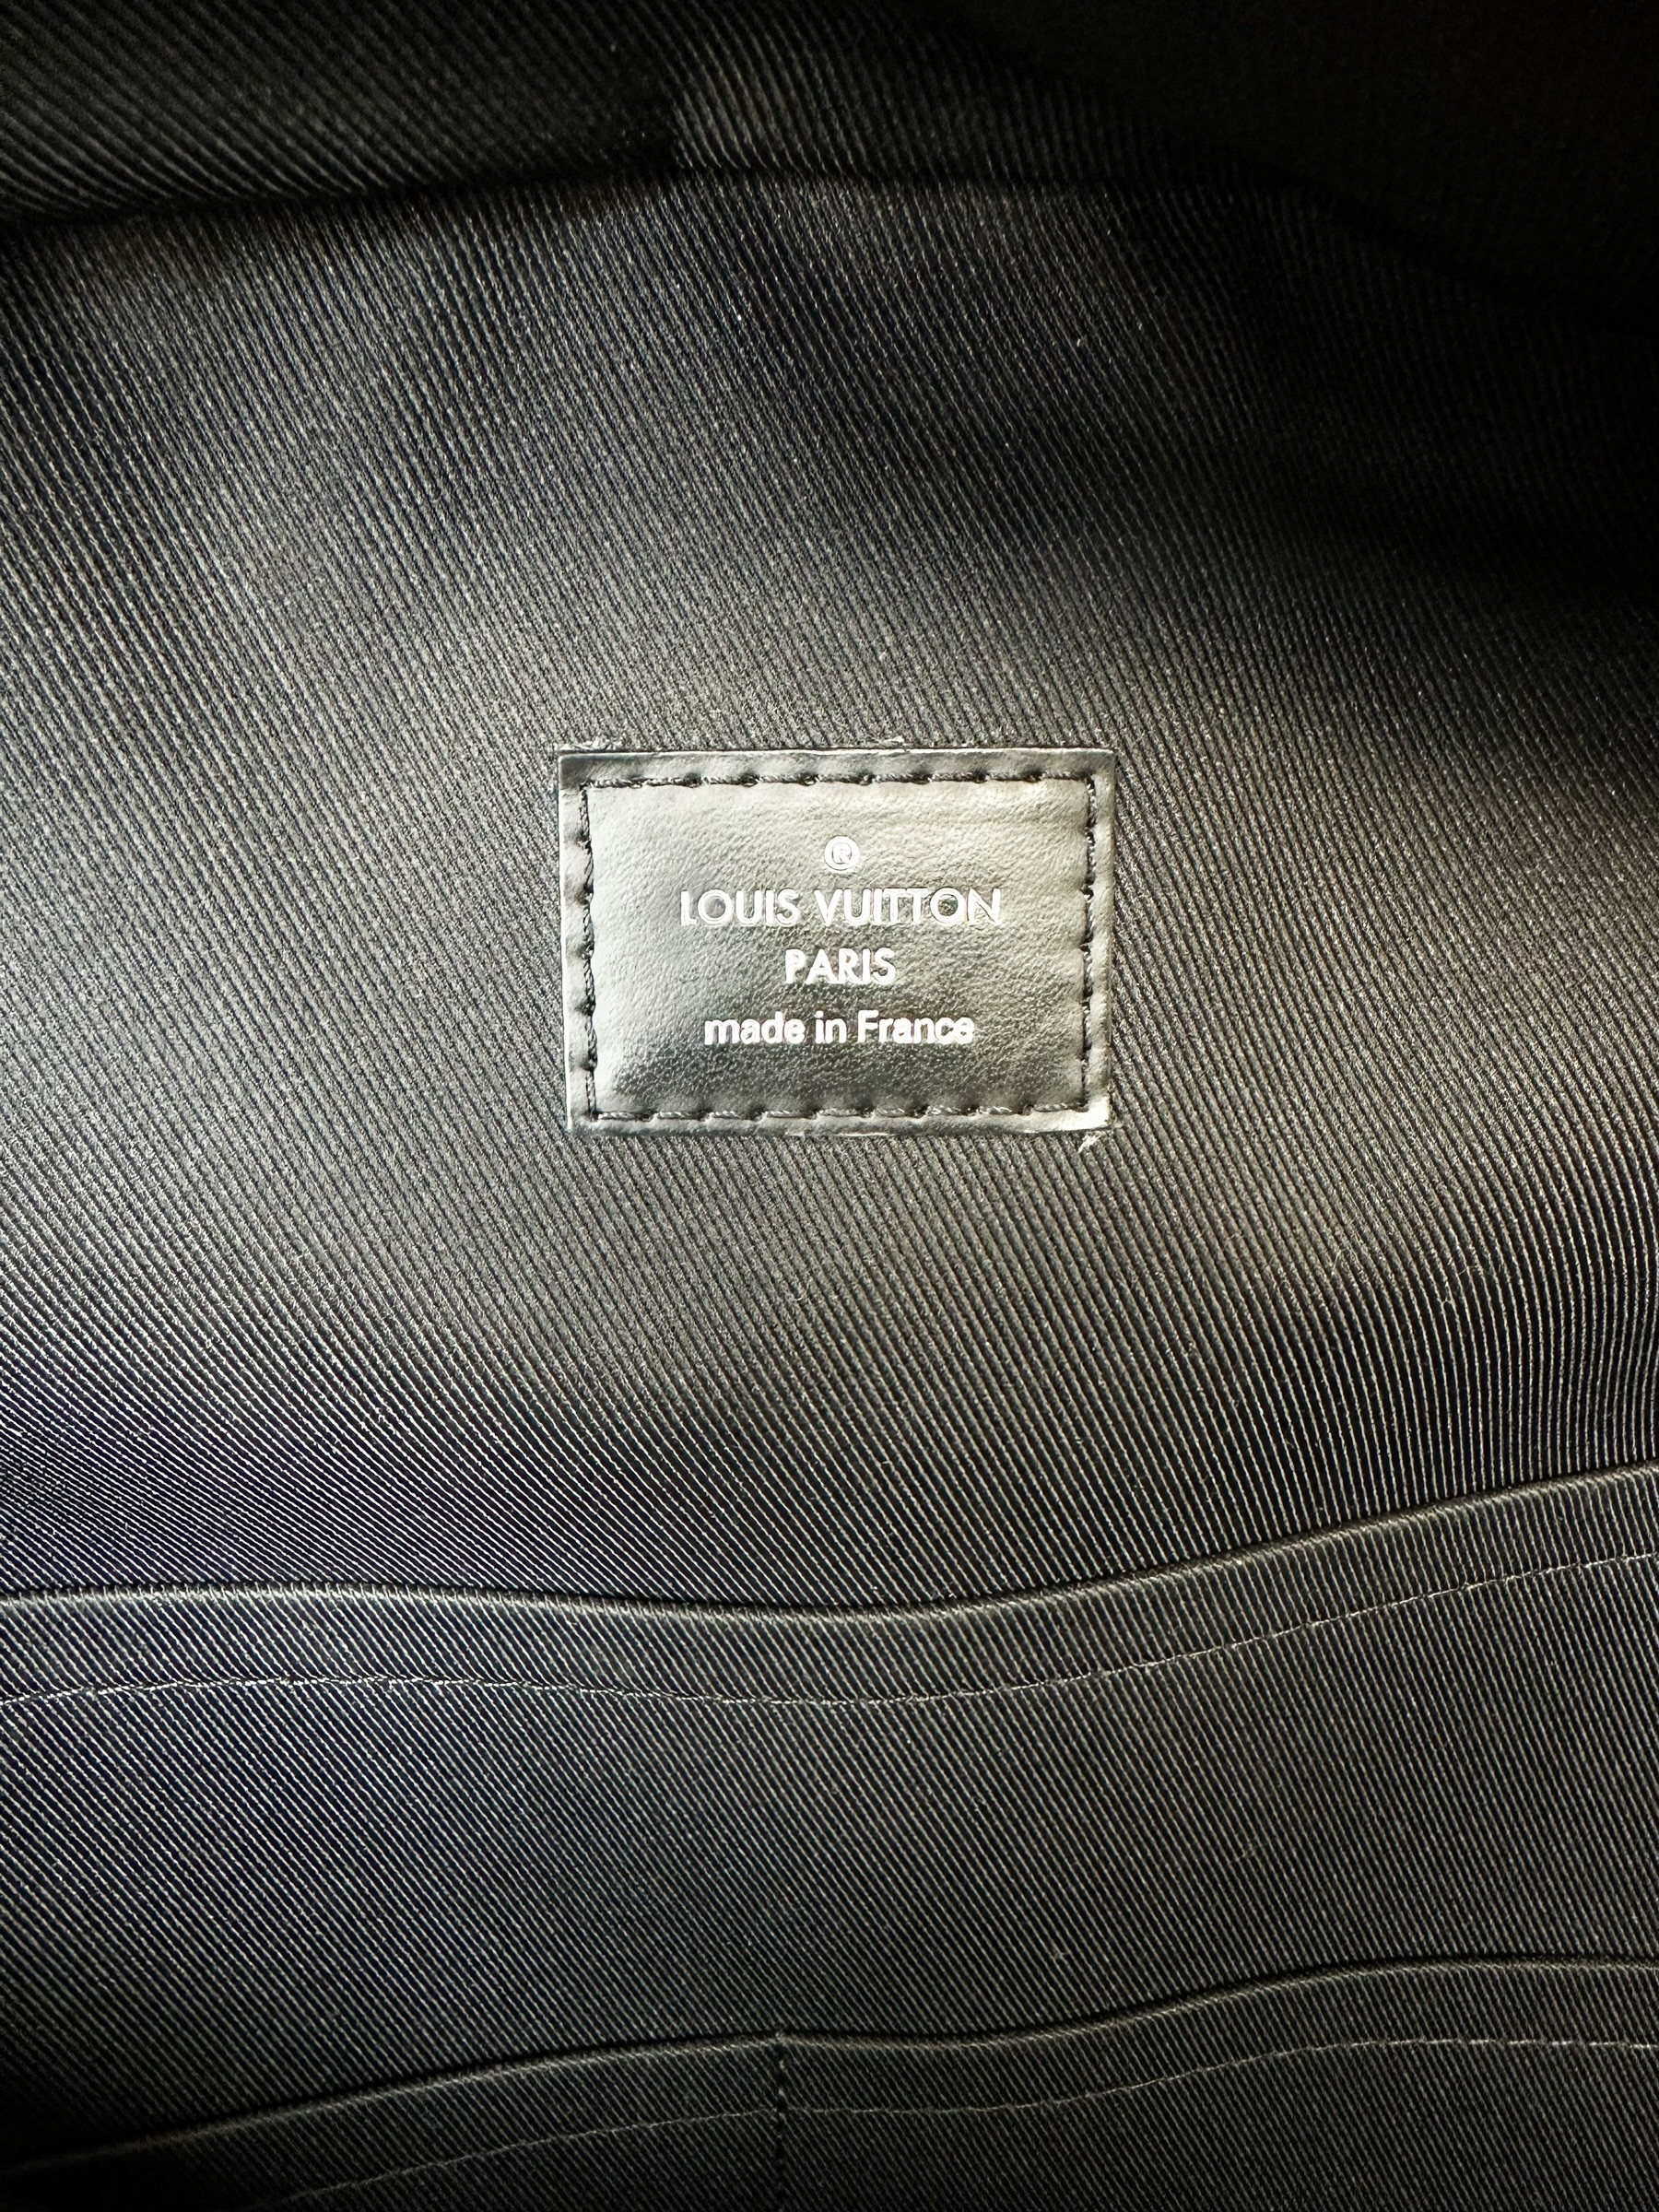 Louis Vuitton Josh Alps Patches Graphite Backpack